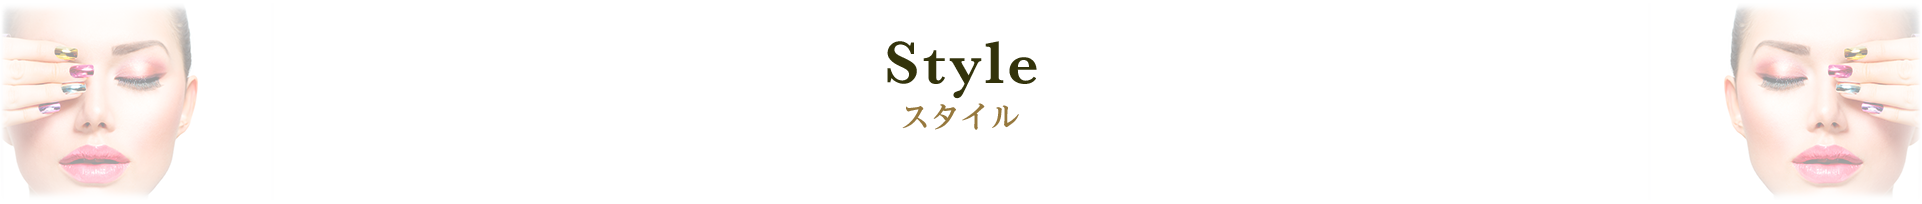 Style